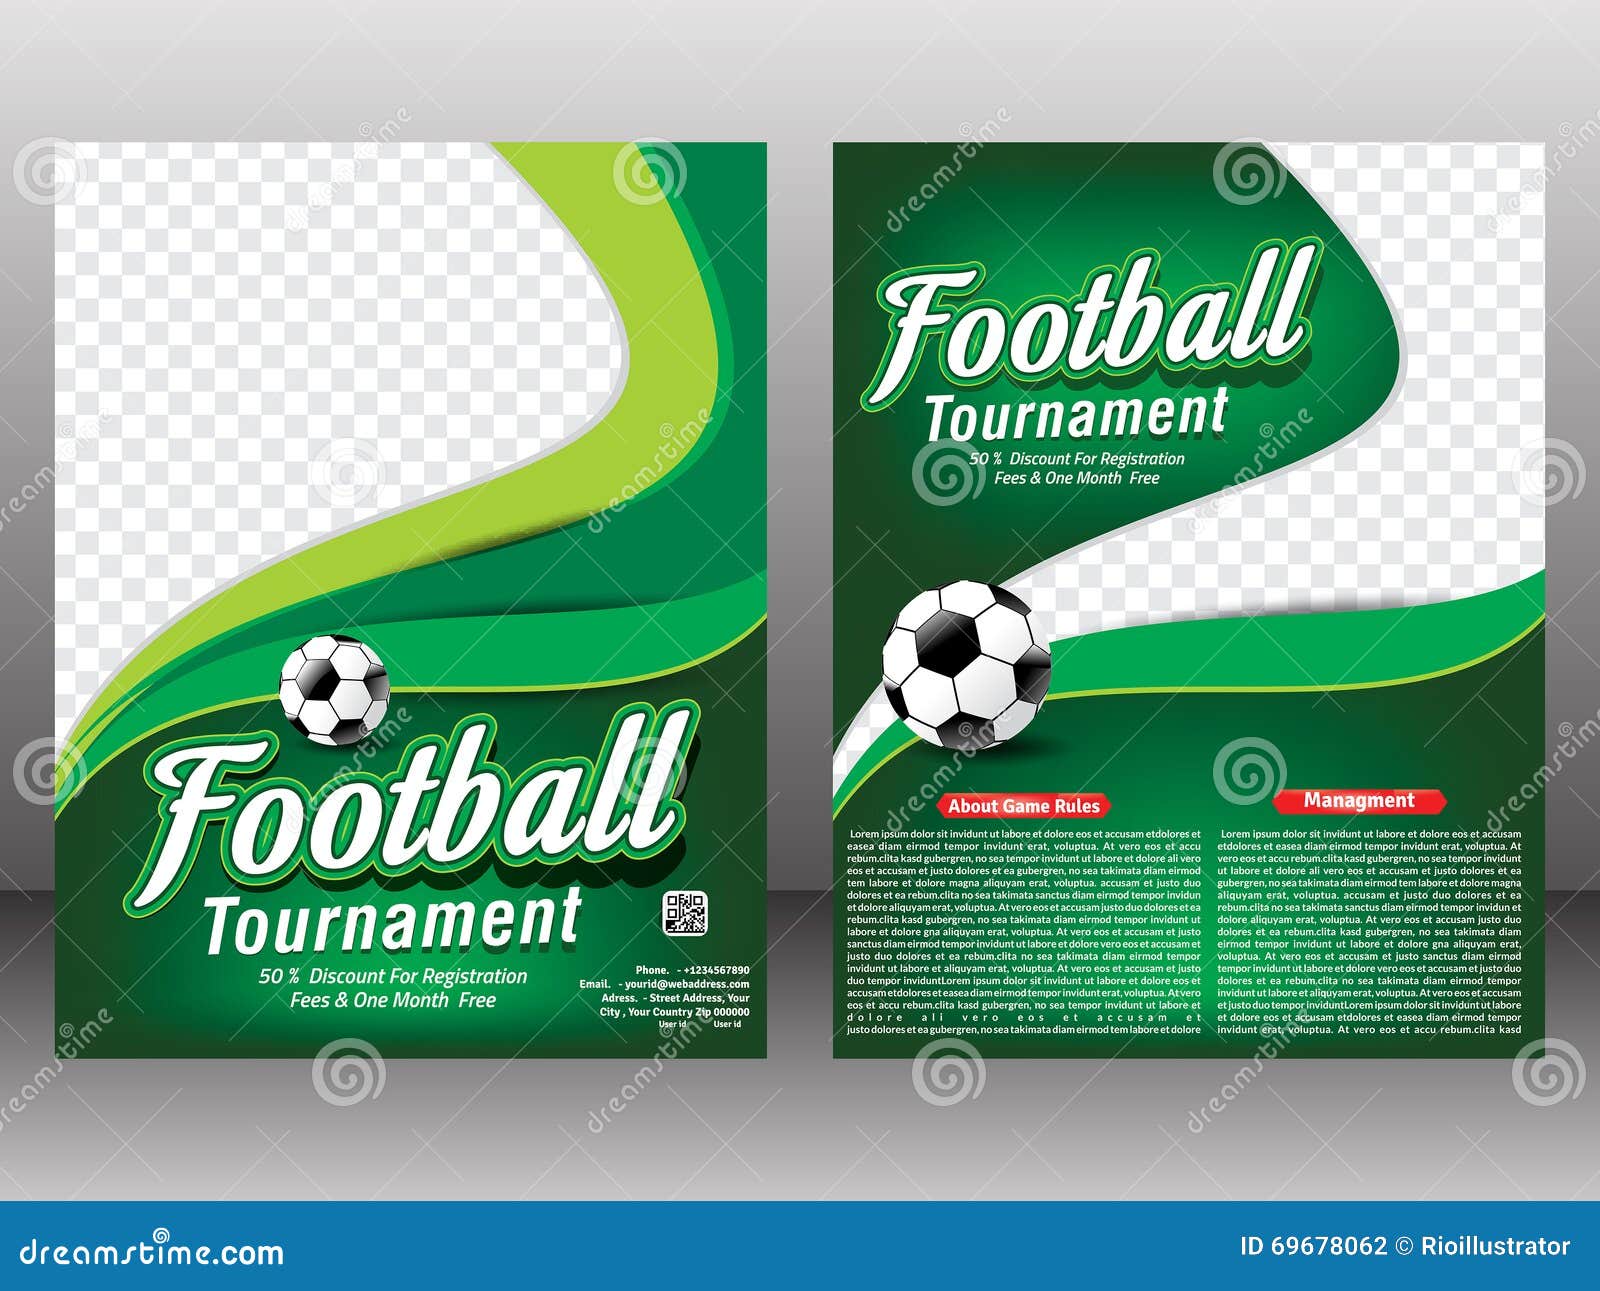 Football Tournament Flyer & Magazine Template Stock Illustration Throughout Football Tournament Flyer Template